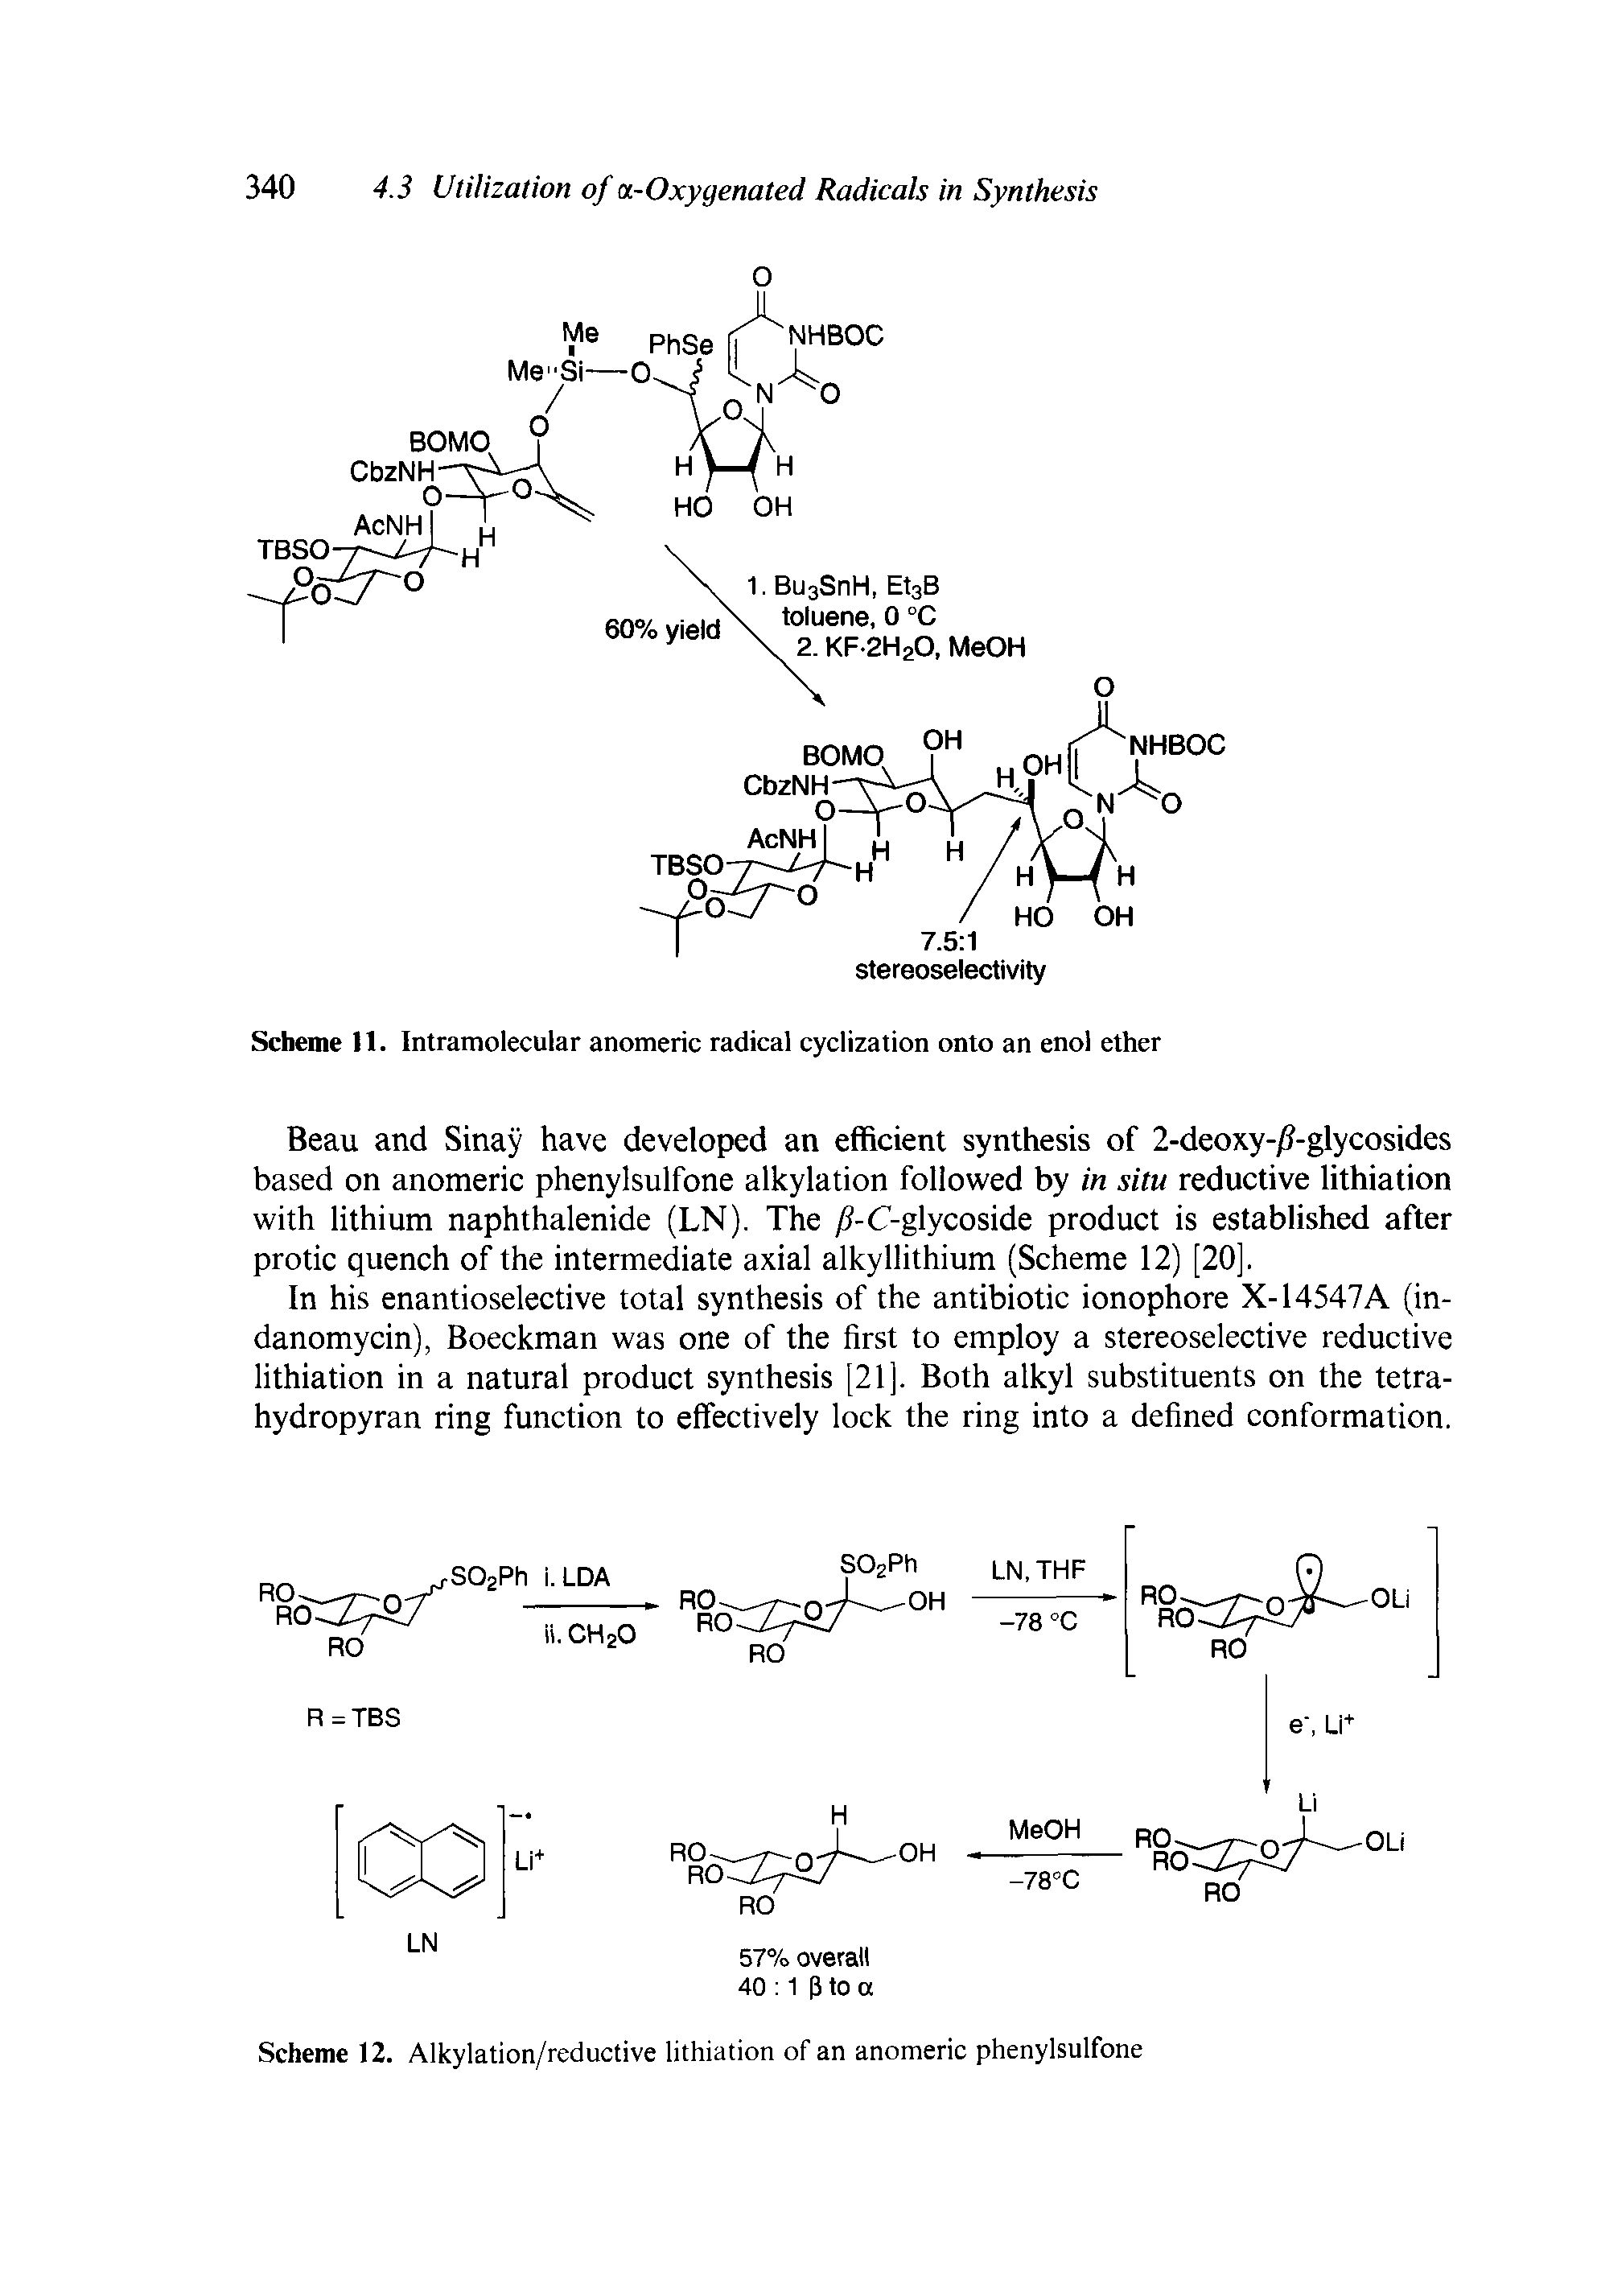 Scheme 12. Alkylation/reductive lithiation of an anomeric phenylsulfone...